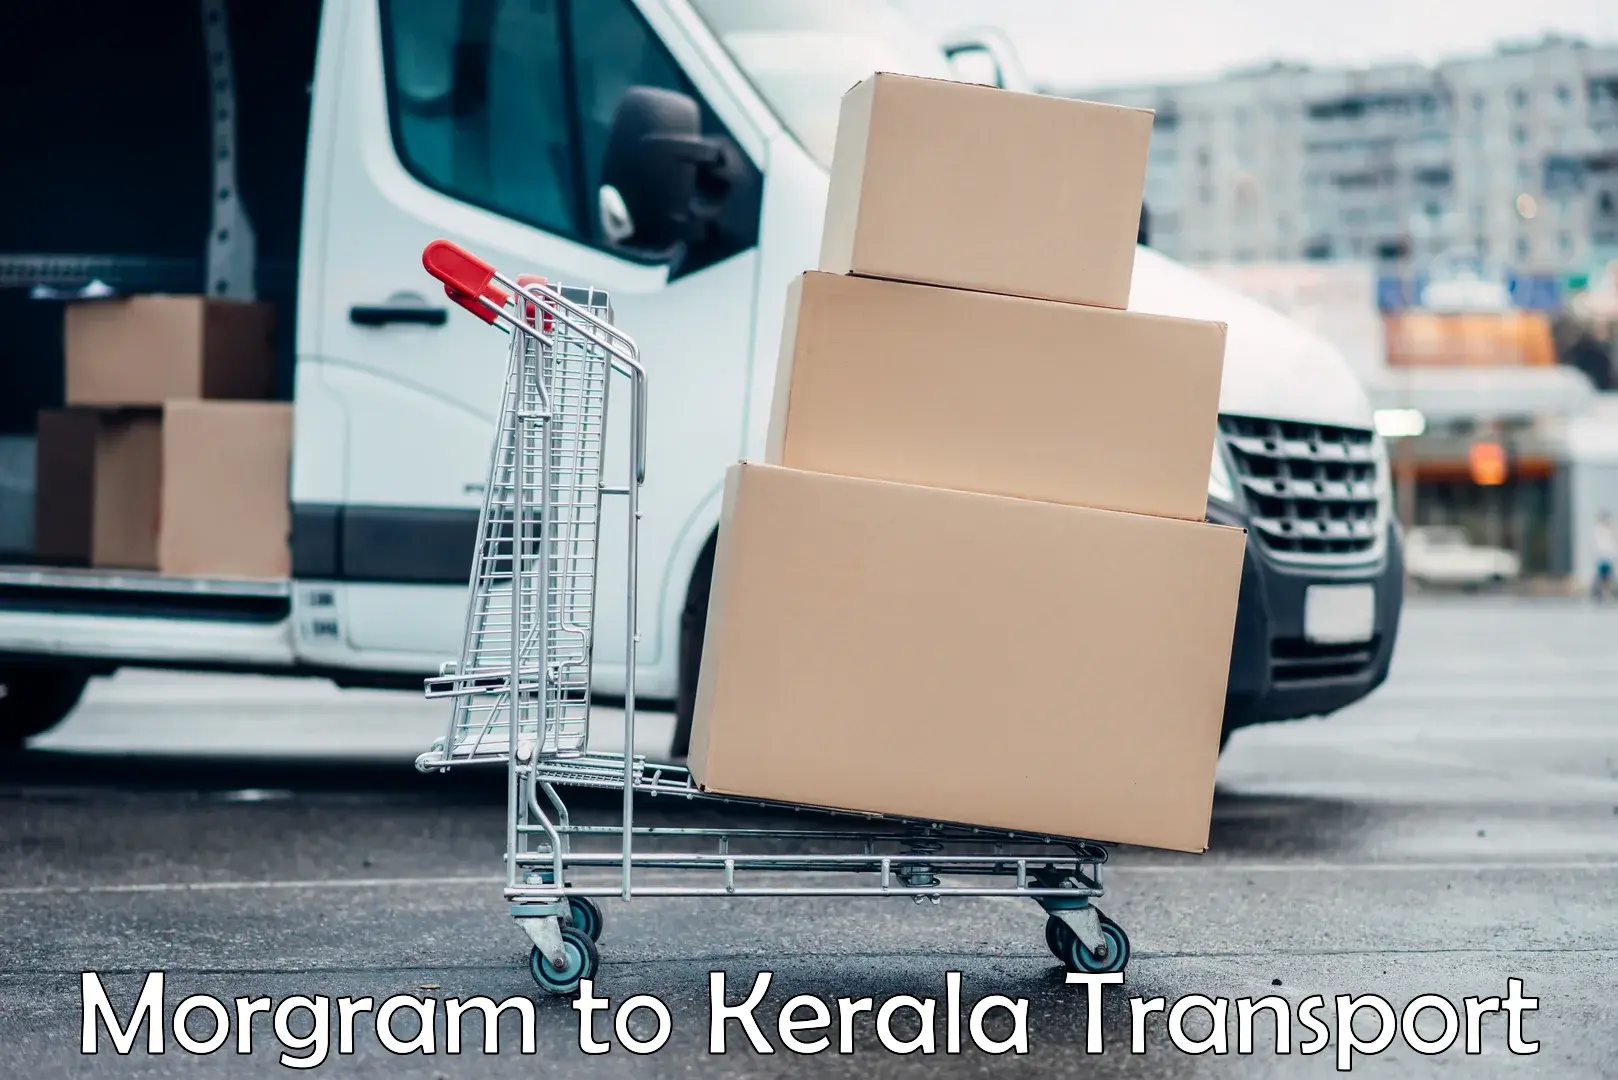 Transport in sharing Morgram to Kerala